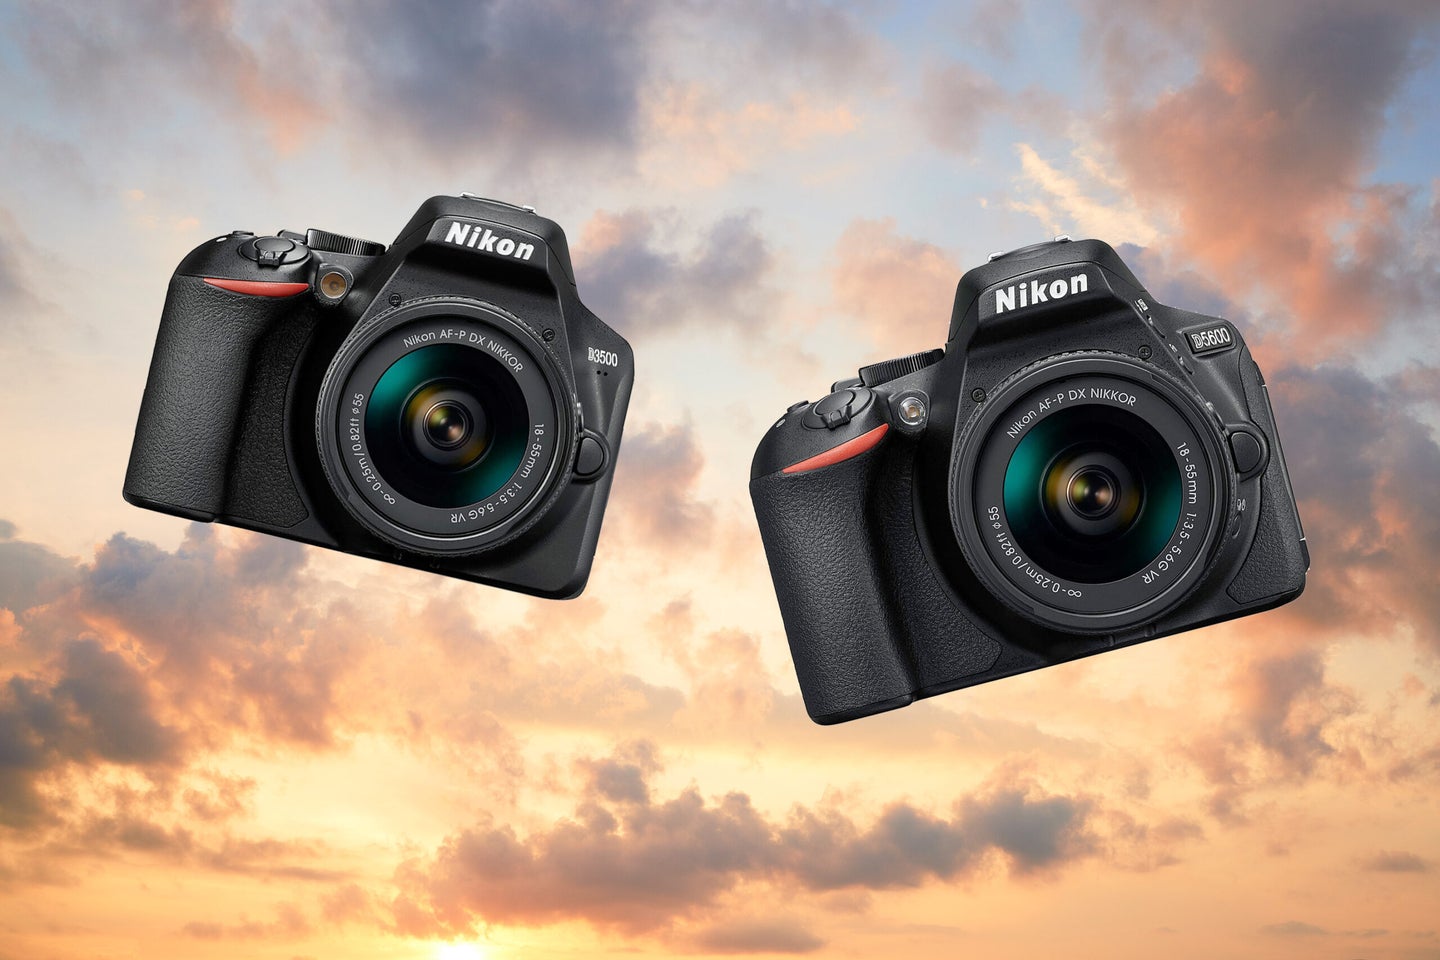 Nikon confirms the end of production for the D3500 & D5600 DSLRs